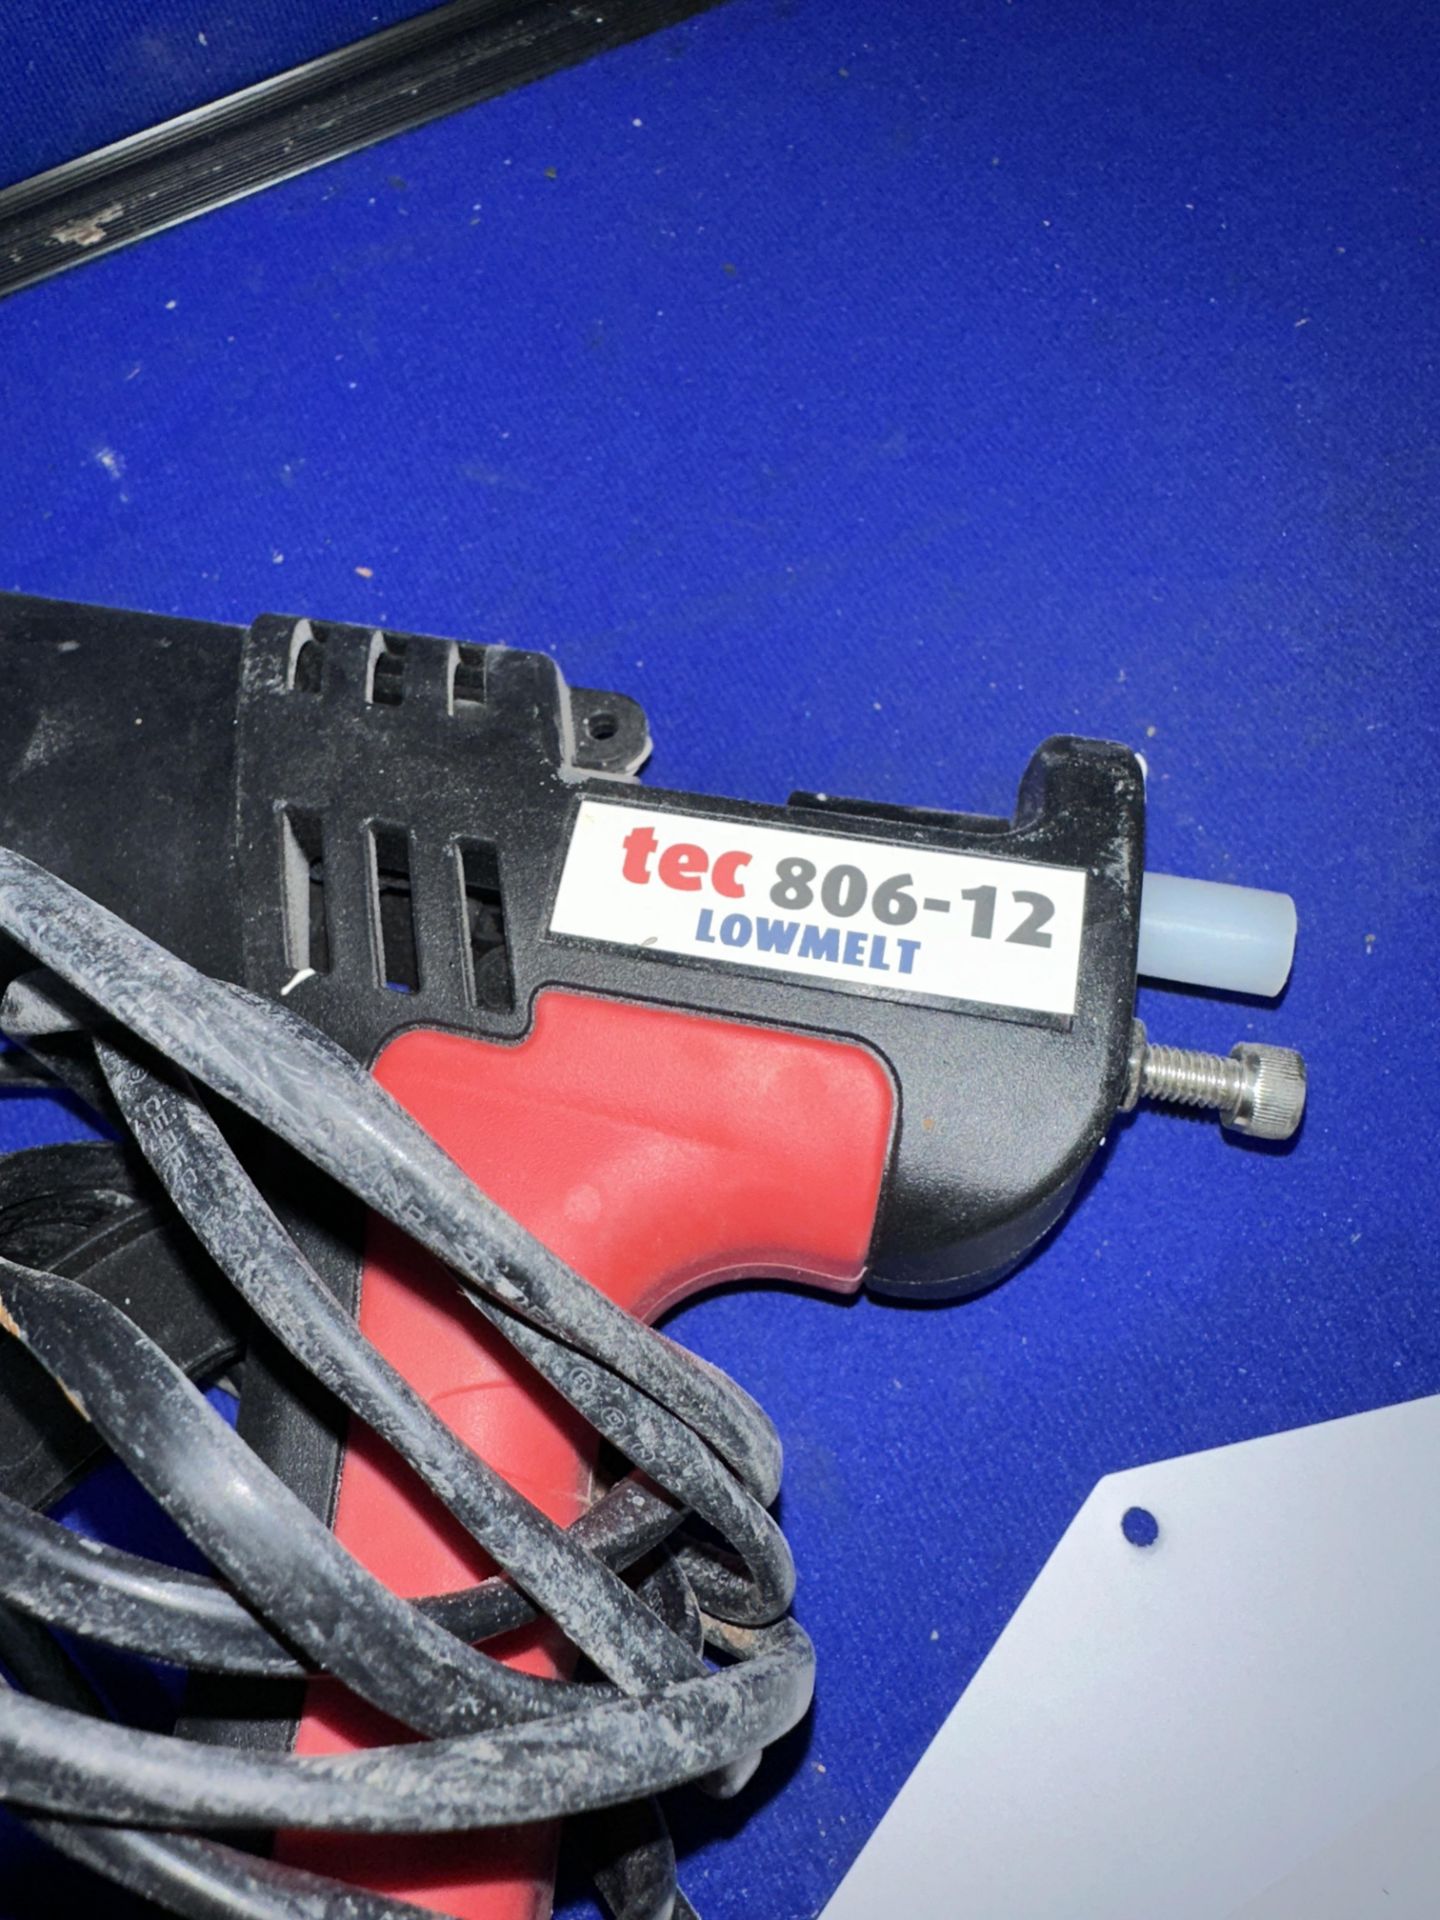 Tec 806-12 lowmelt glue gun - Image 2 of 2